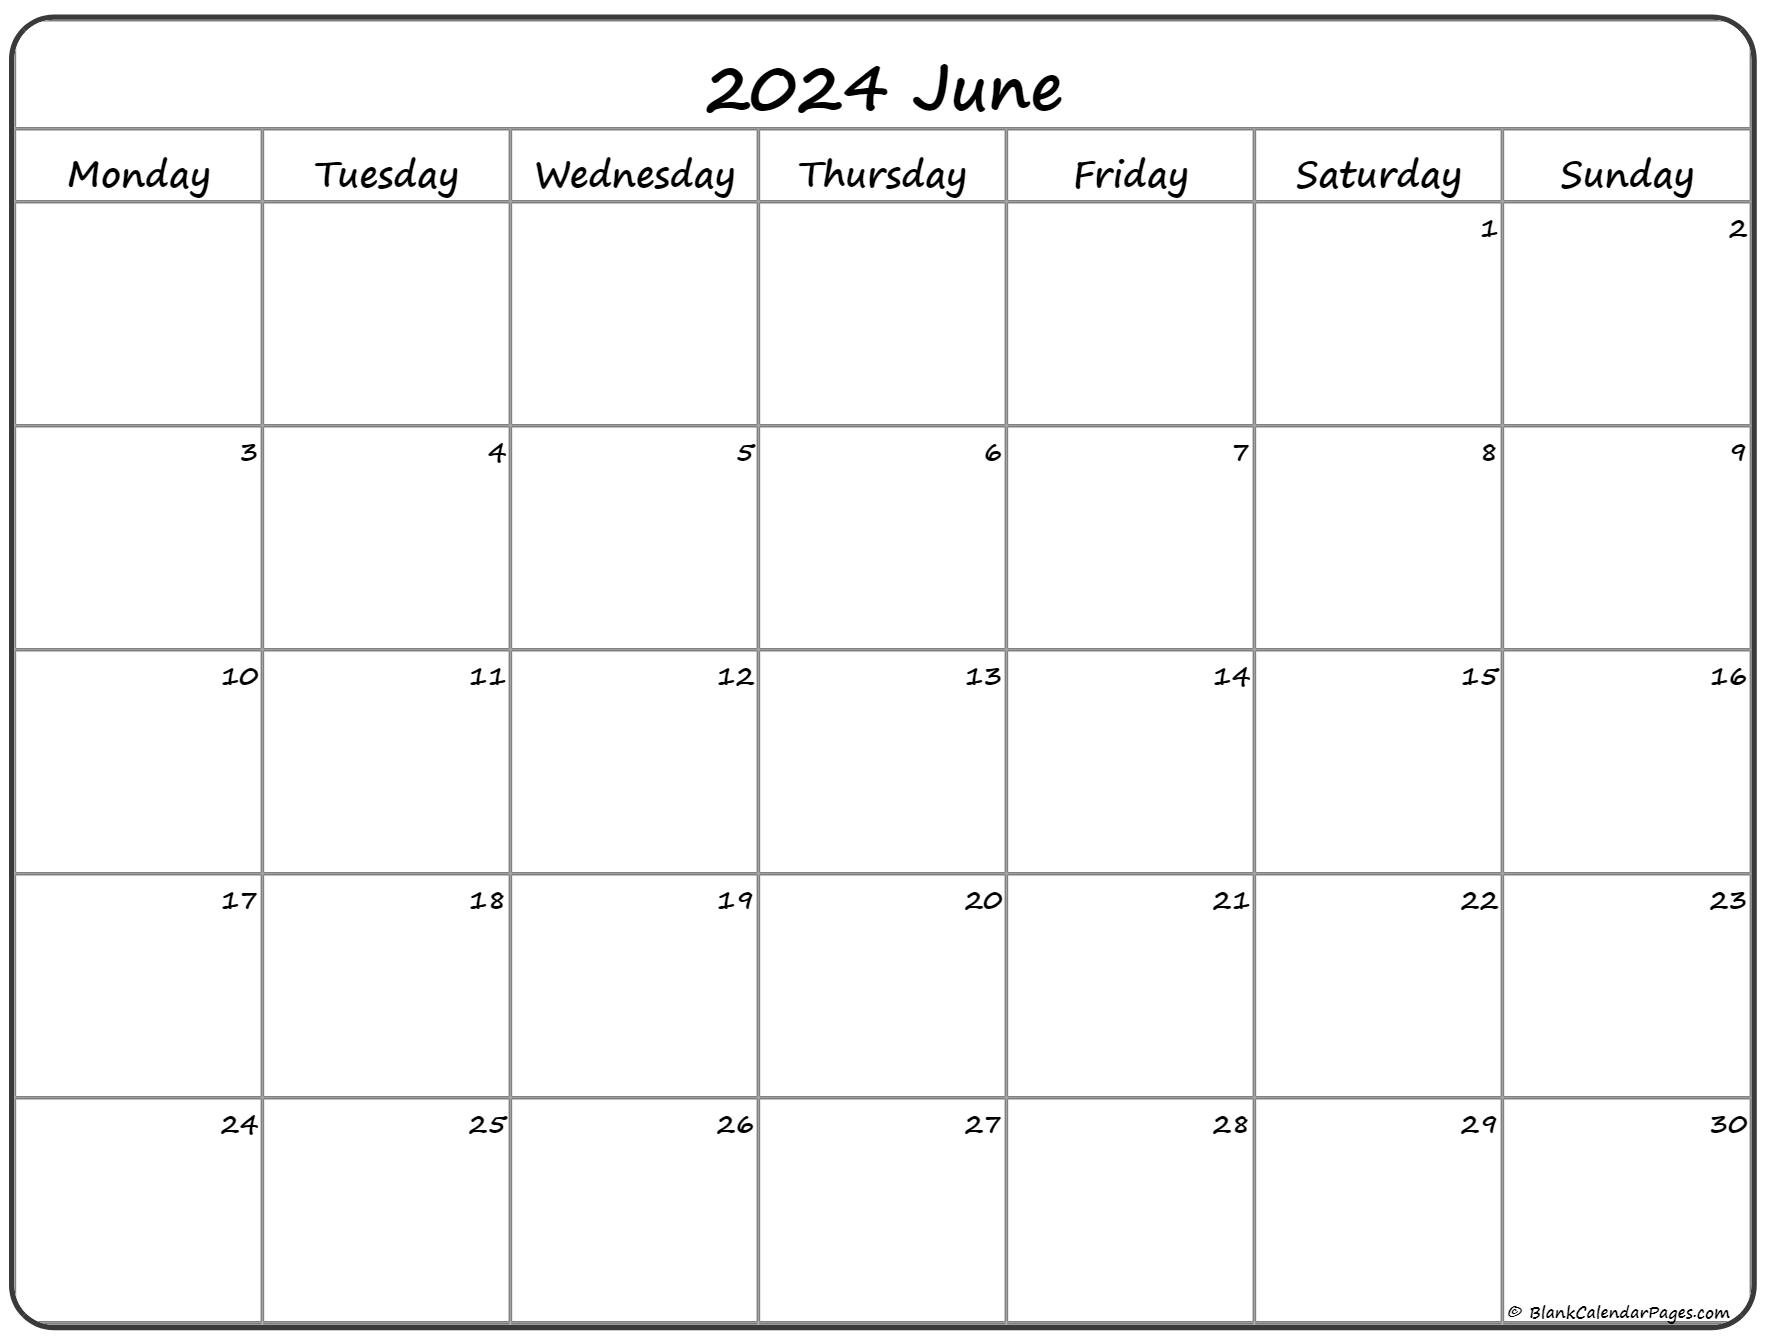 June 2024 Monday Calendar | Monday to Sunday